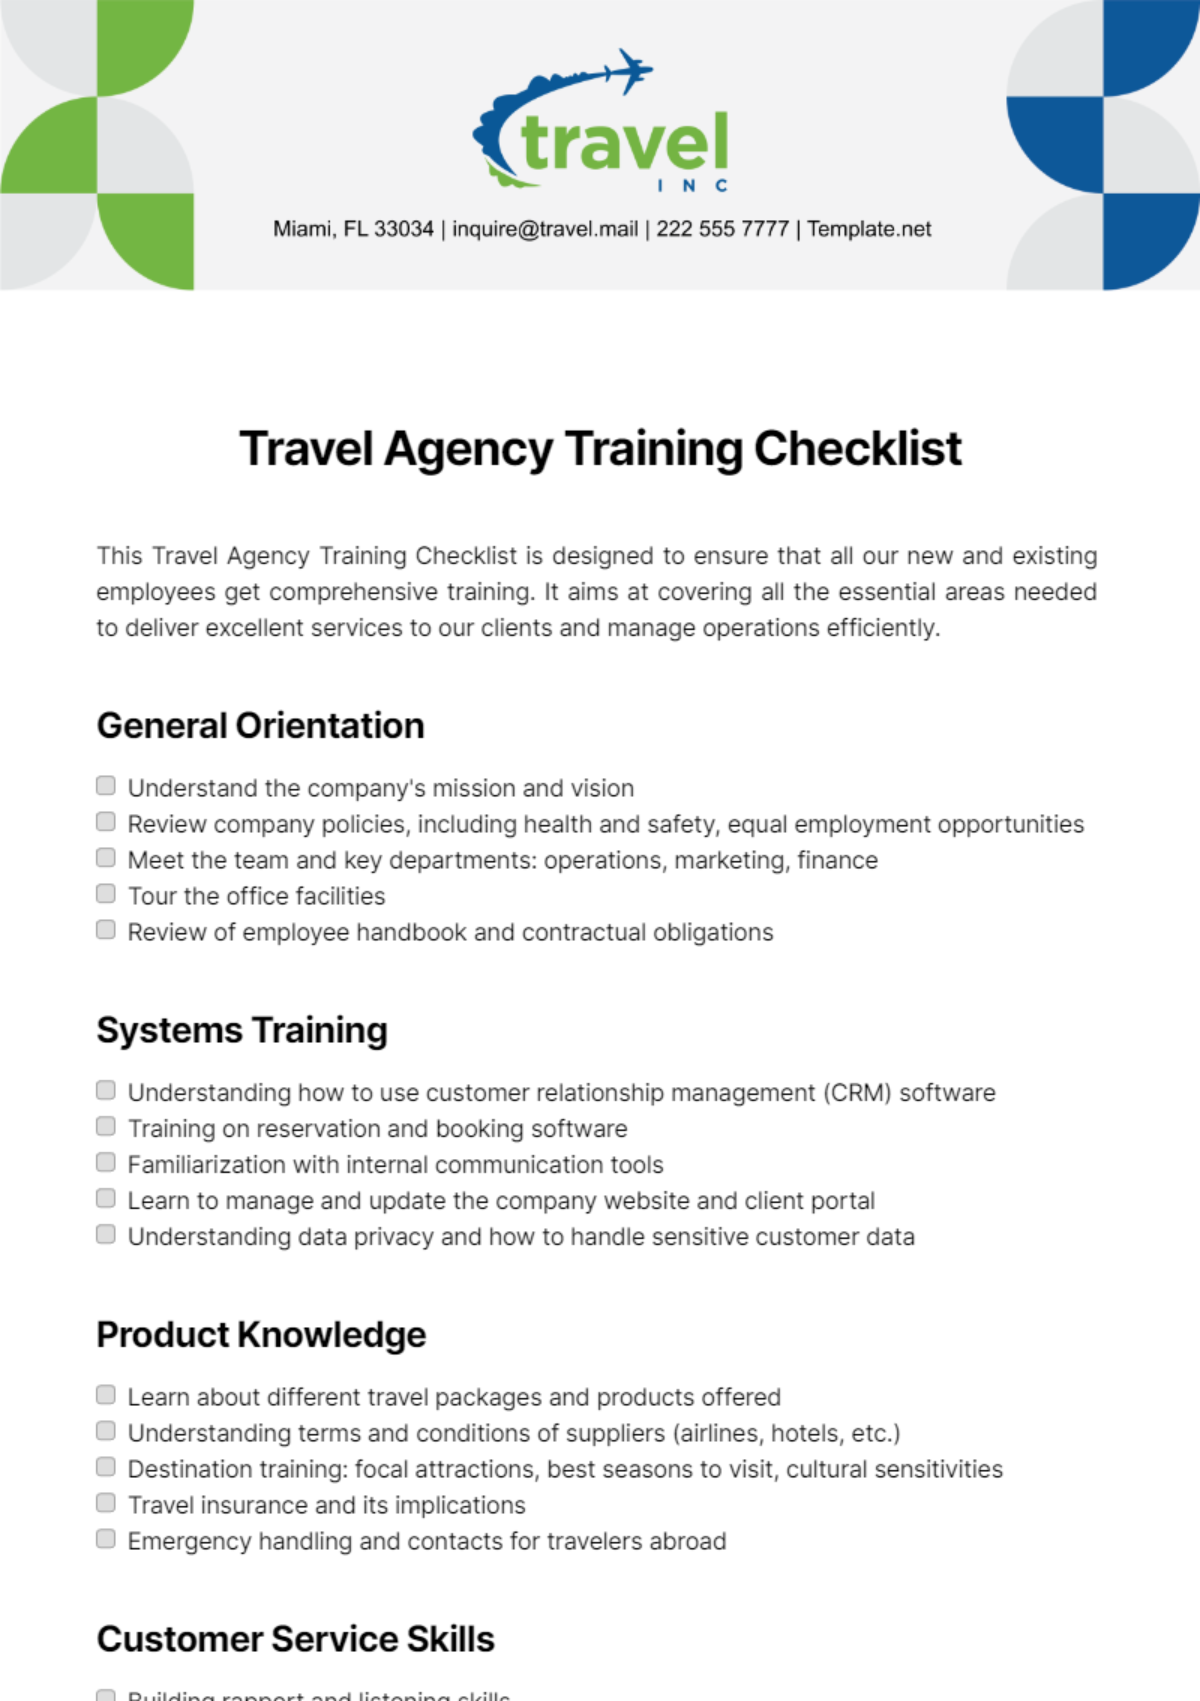 Travel Agency Training Checklist Template